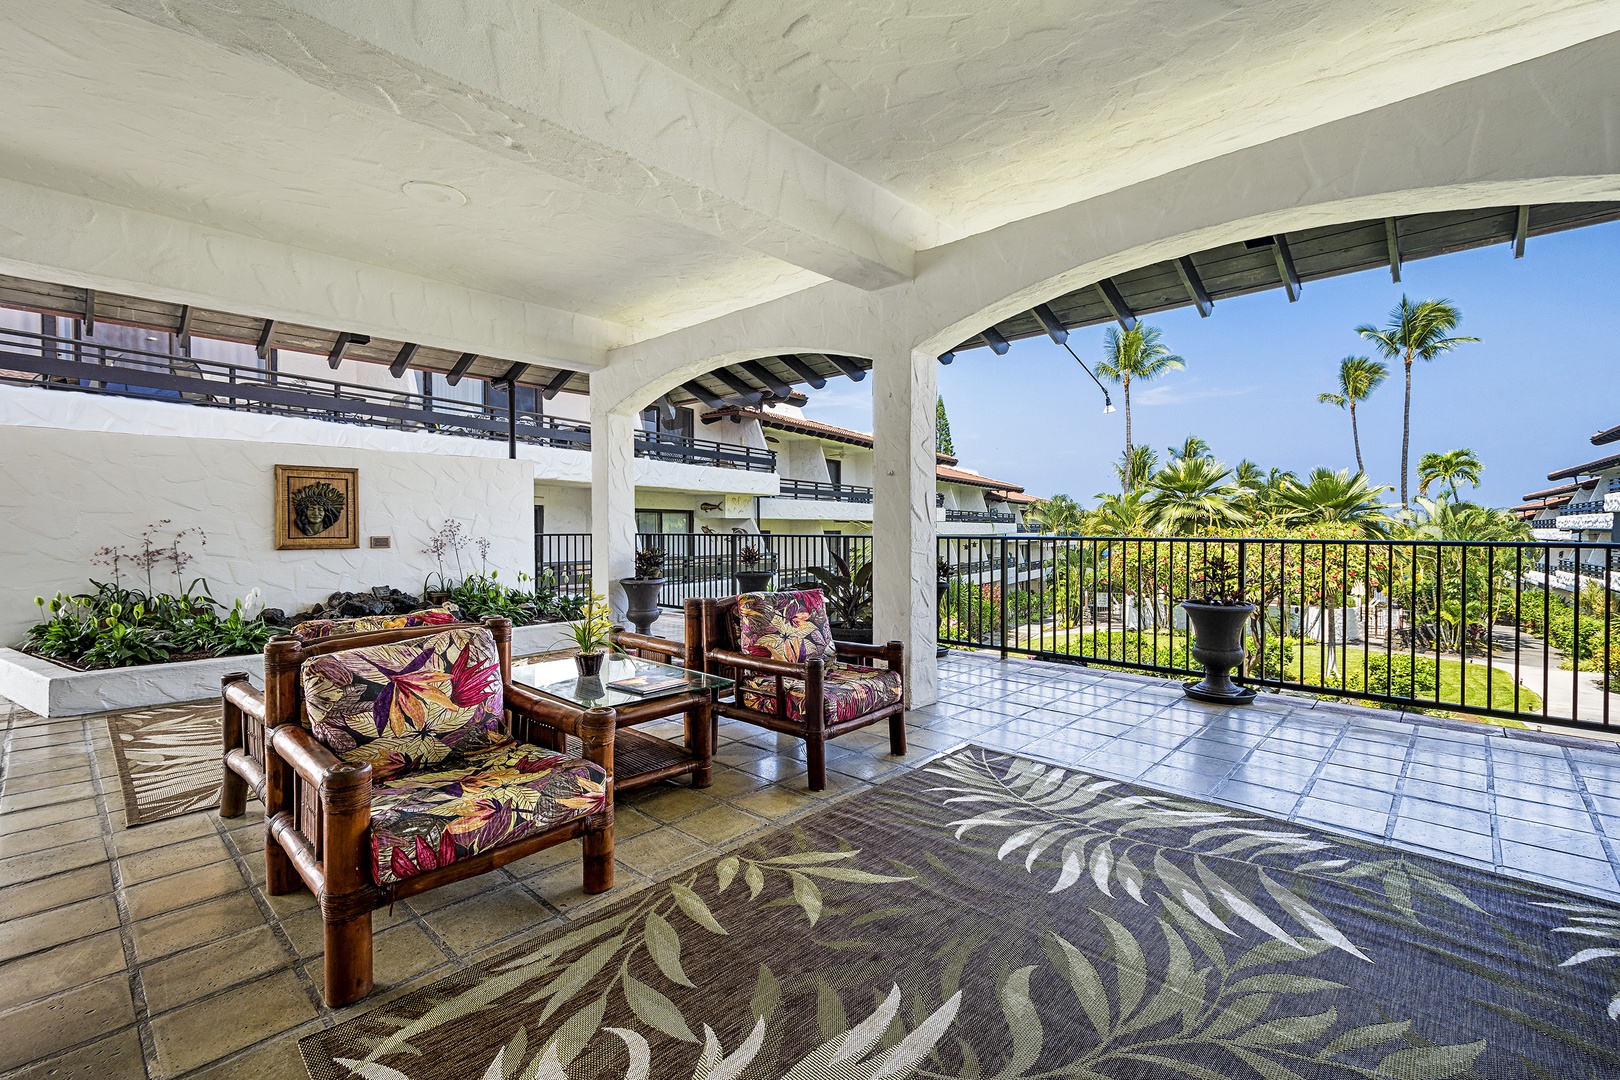 Kailua Kona Vacation Rentals, Casa De Emdeko 104 - Casa De Emdeko shaded seating area at the entrance to the complex